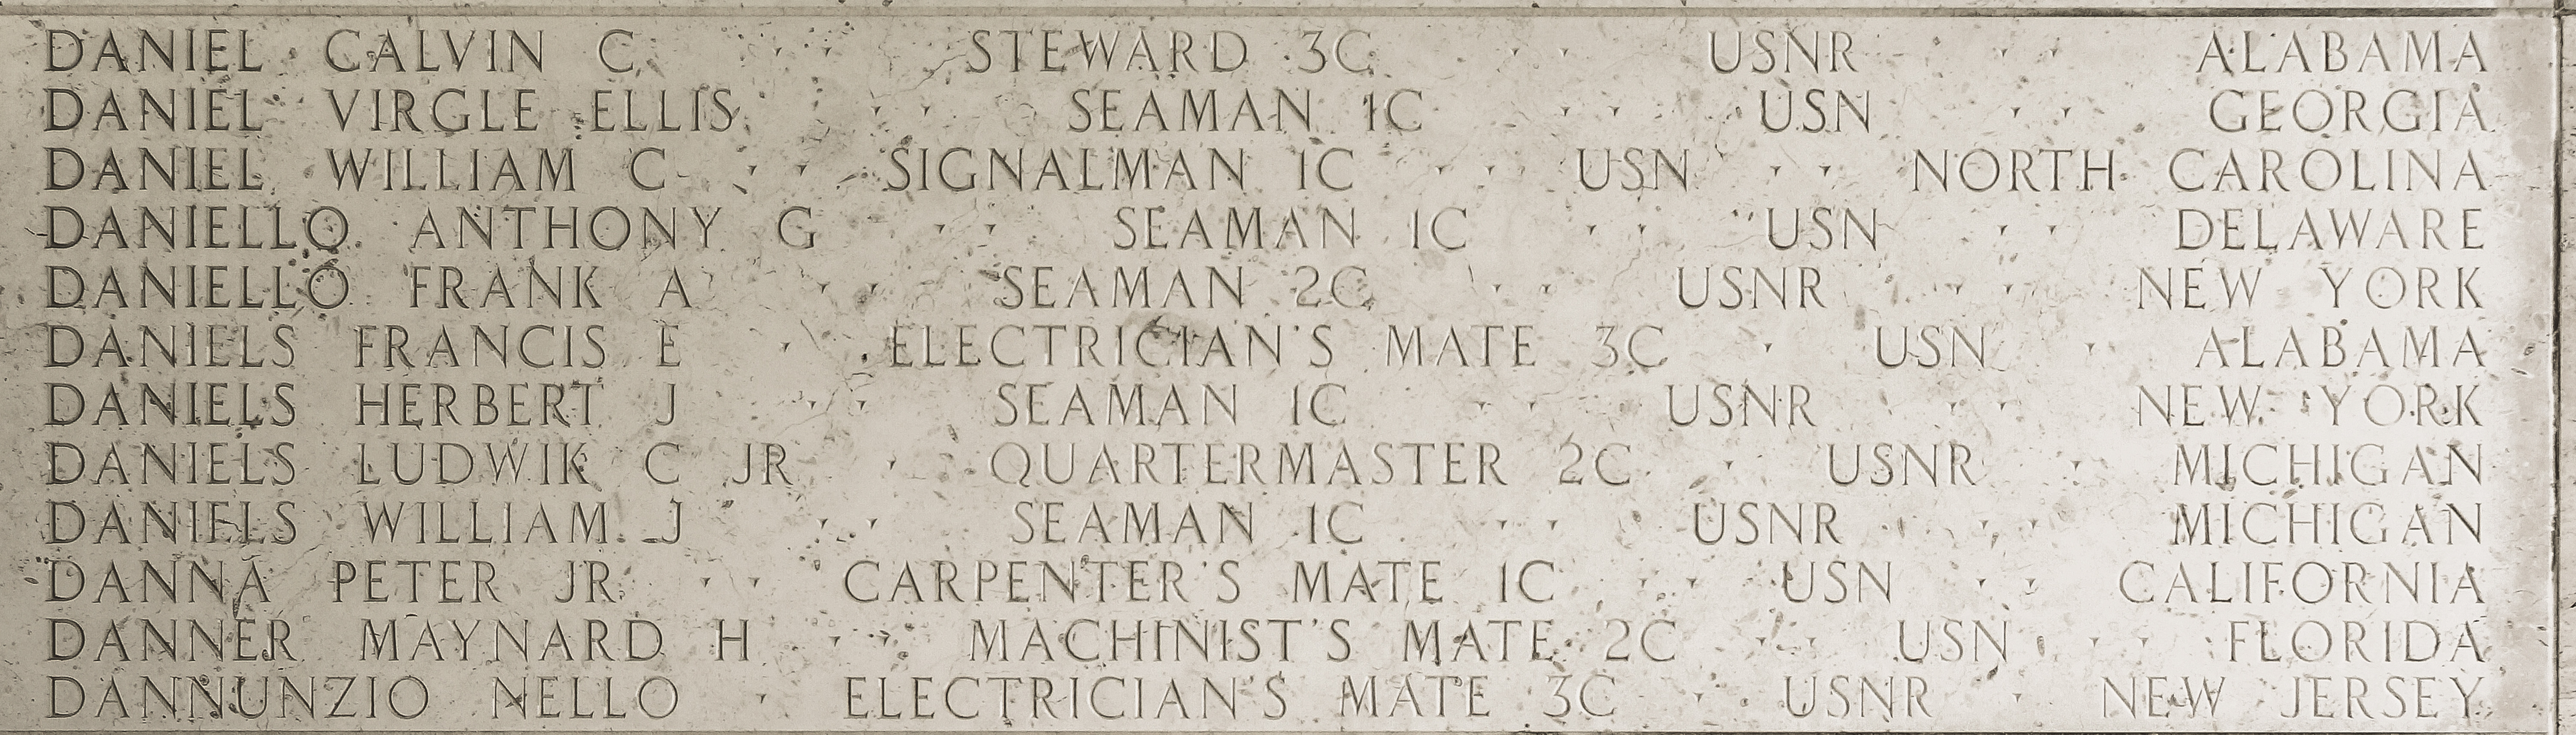 William C. Daniel, Signalman First Class